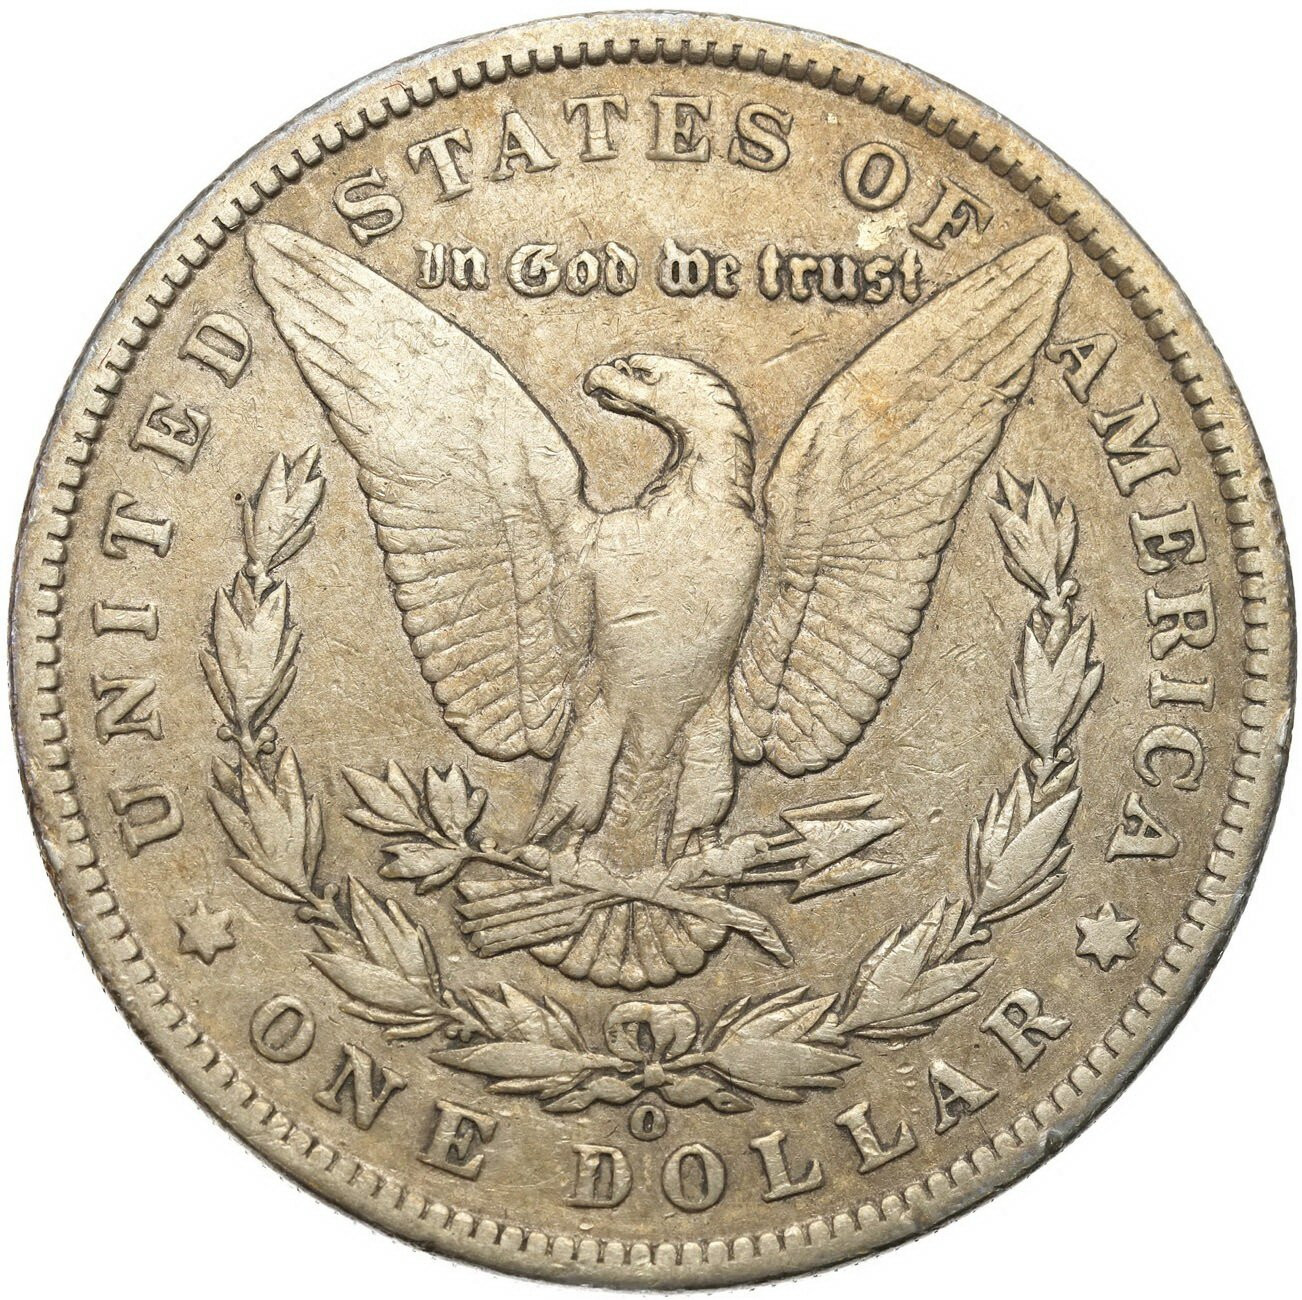 USA 1 dolar 1900 O, New Orleans 